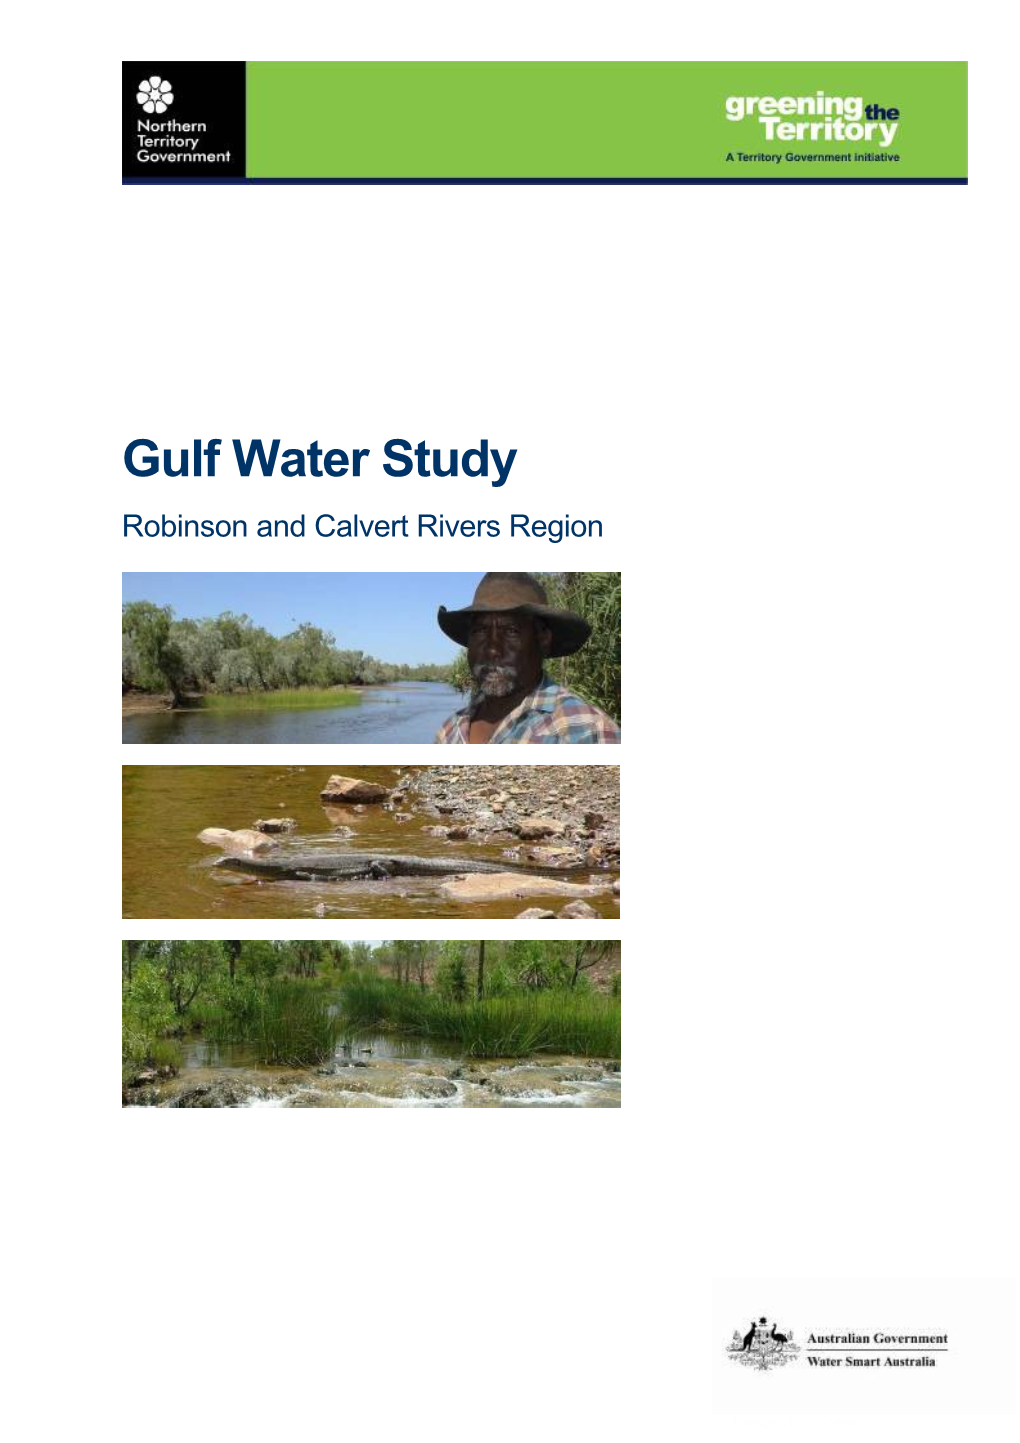 Gulf Water Study: Robinson and Calvert Rivers Region